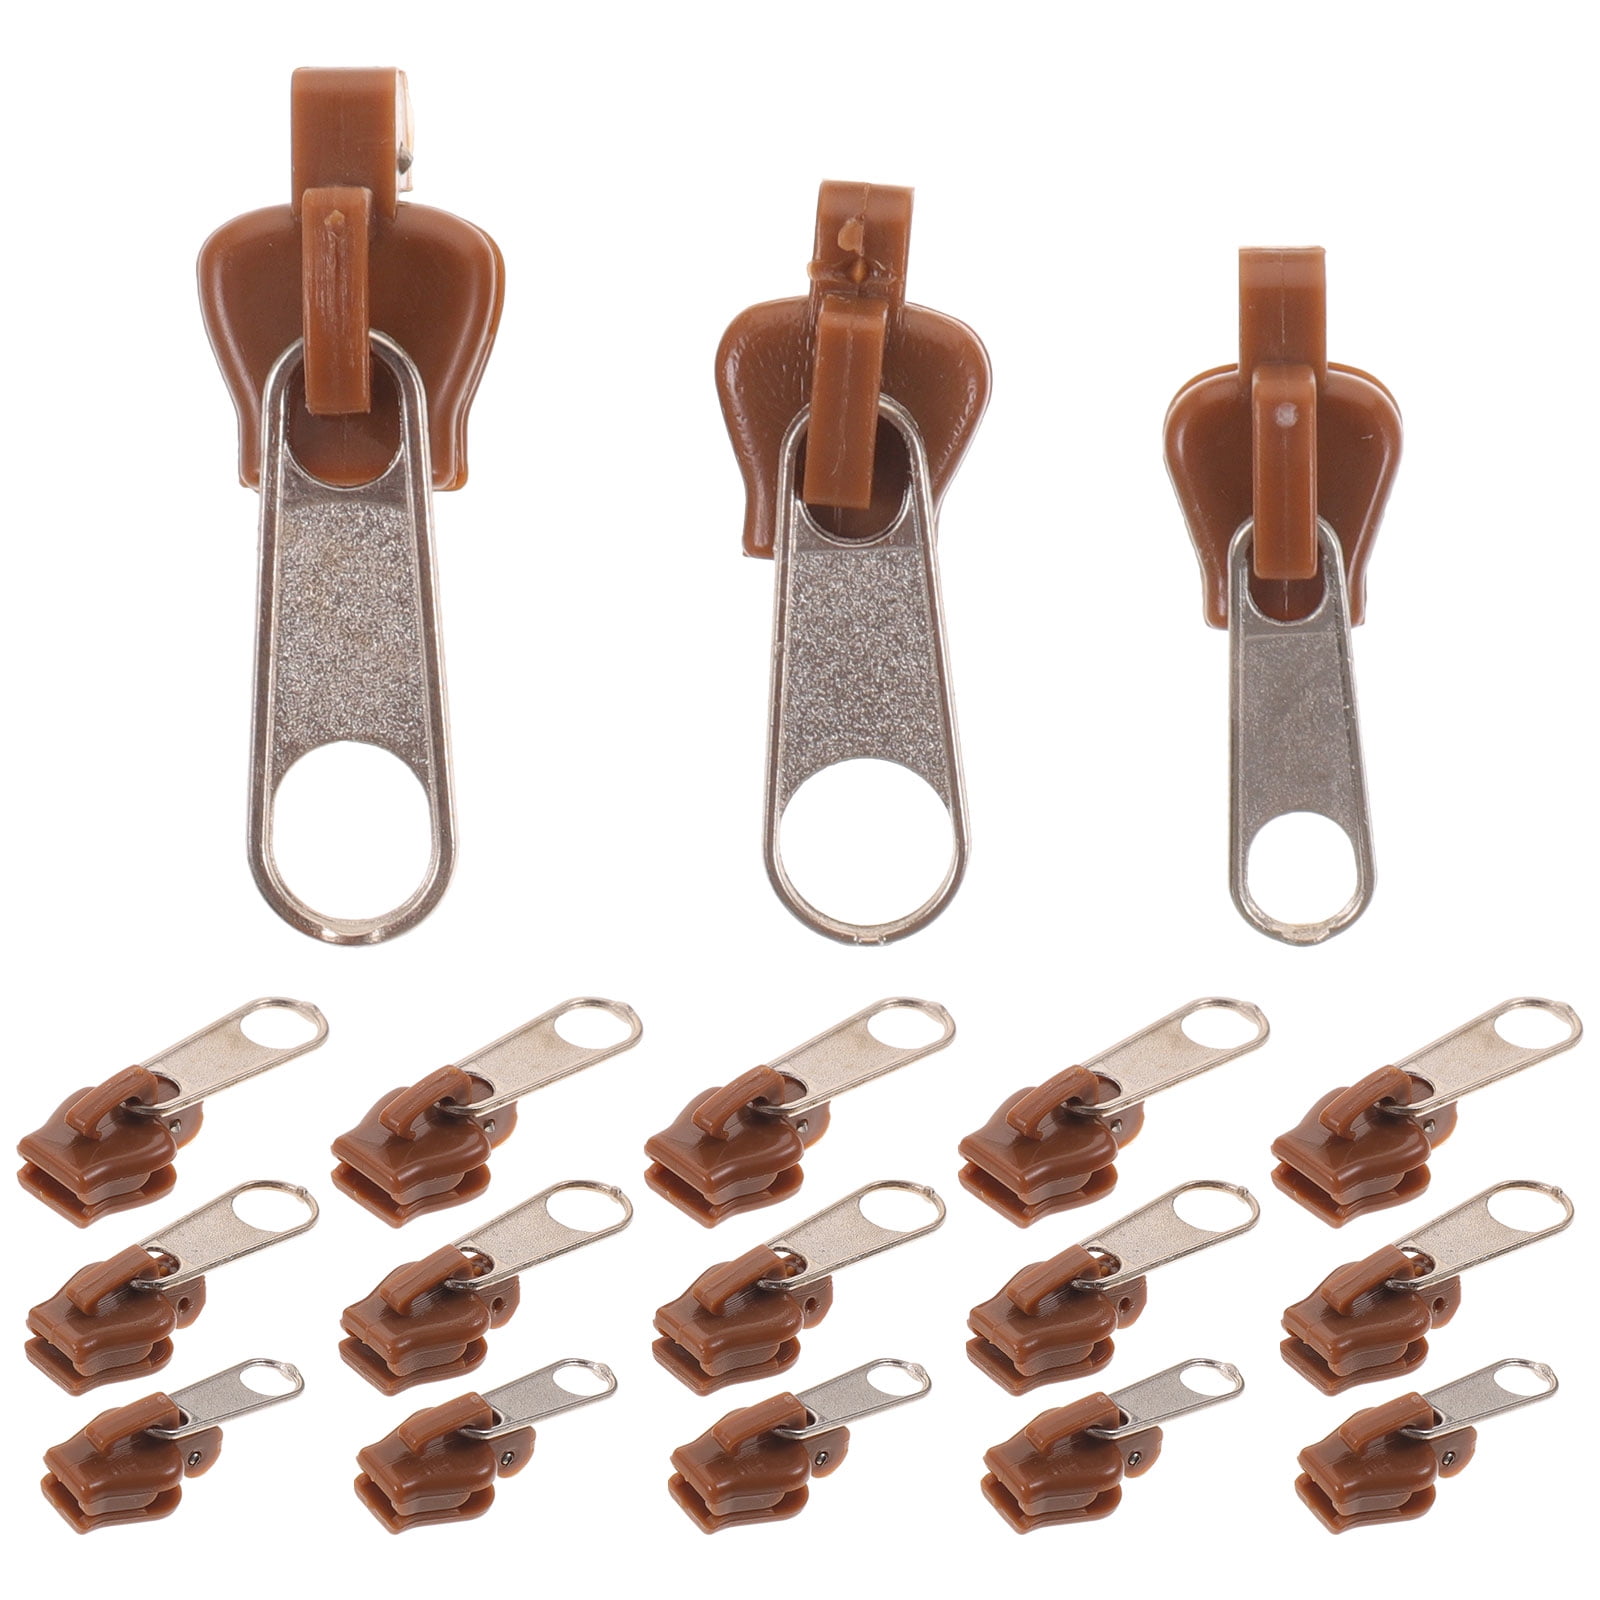 18pcs Zipper Slider Replacement Kit Zipper Repair Kit for Jackets